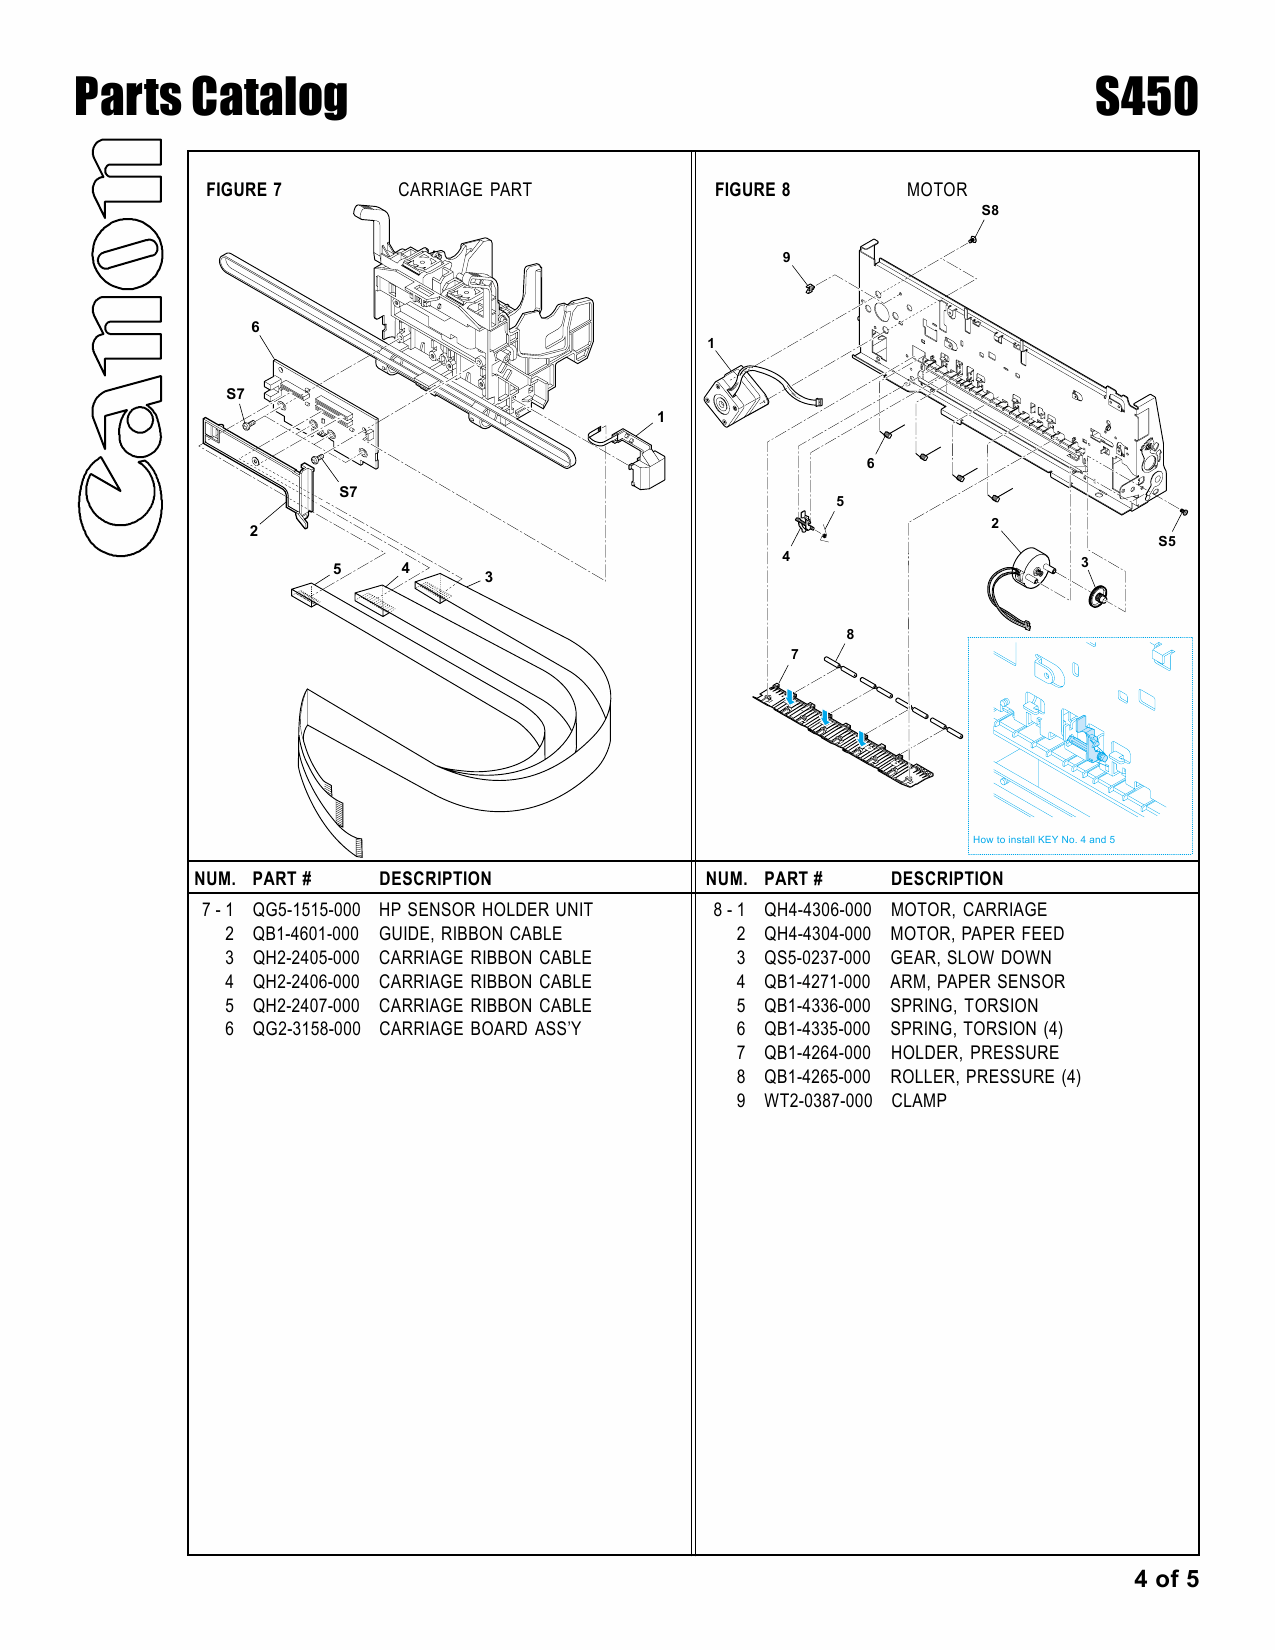 Canon PIXUS S450 Parts Catalog Manual-5